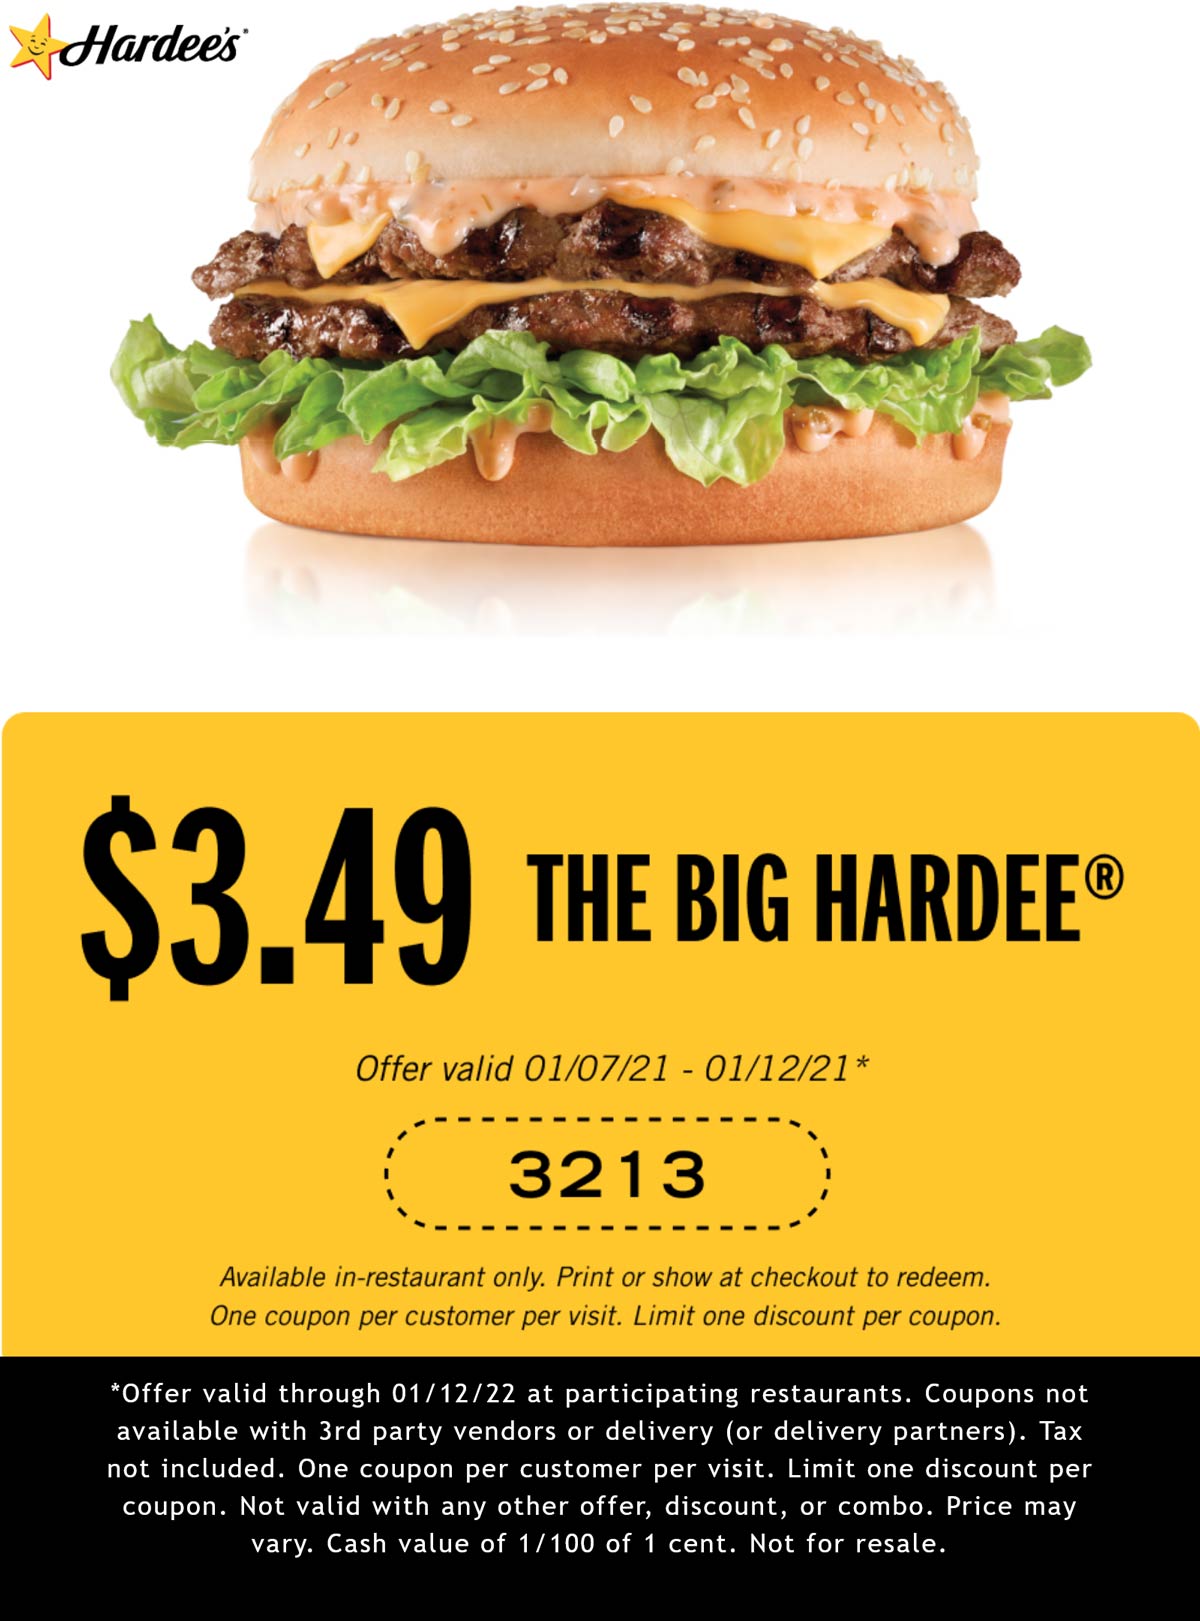 Hardees restaurants Coupon  Big hardee cheeseburger for $3.49 at Hardees #hardees 